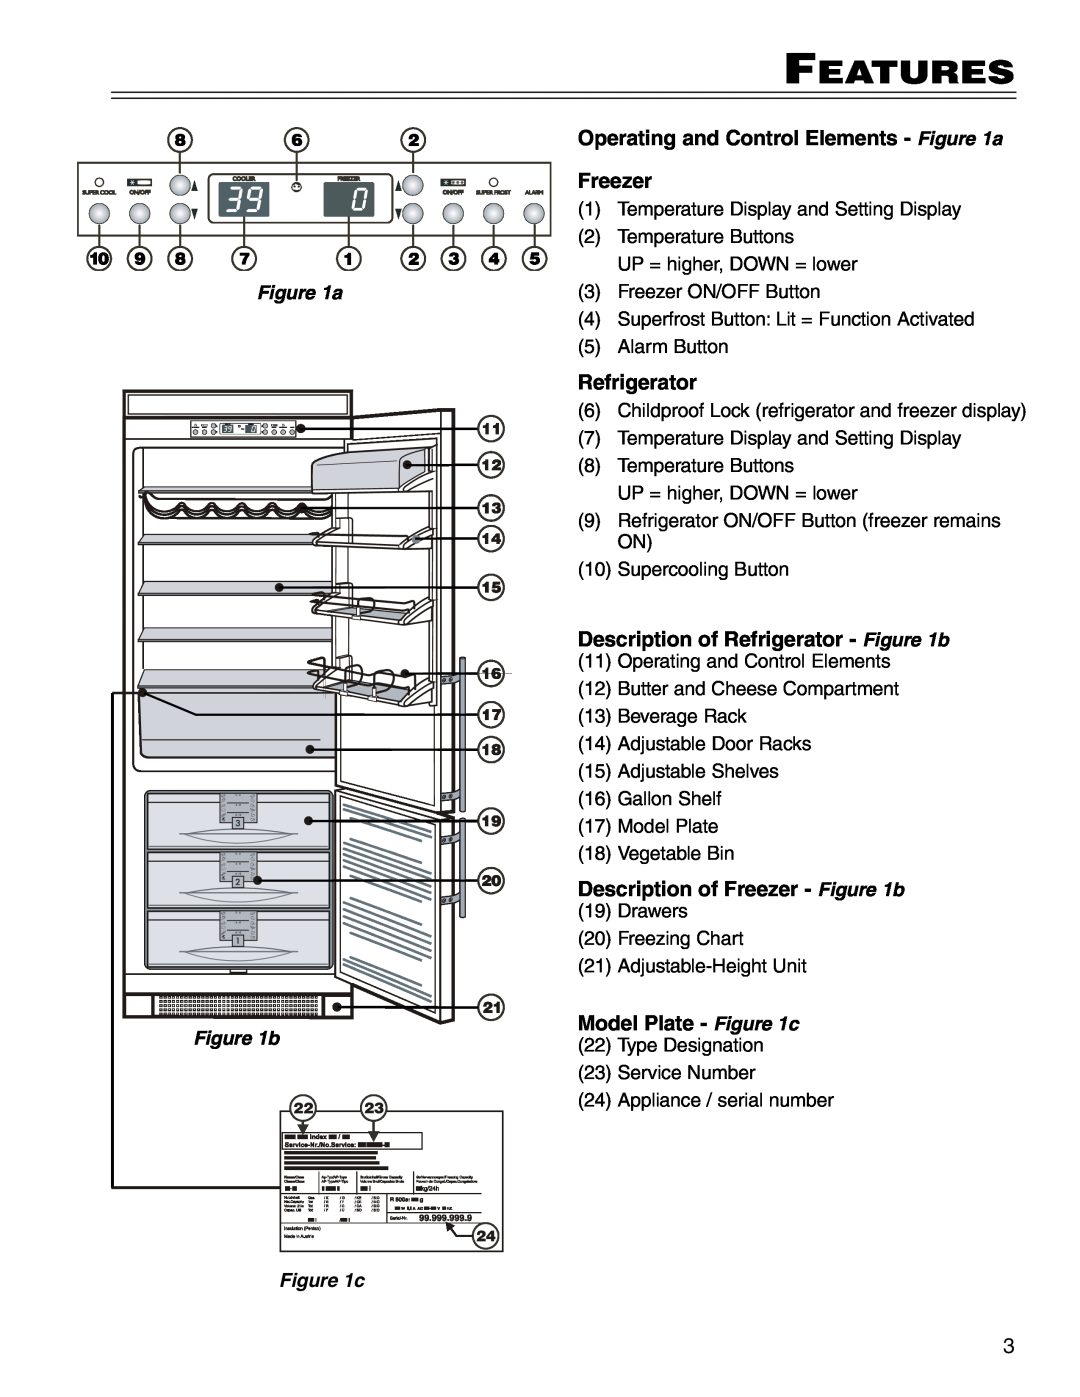 Liebherr 7080 361-03, CI16, CS16 Features, Operating and Control Elements - a, Freezer, Description of Refrigerator - b 